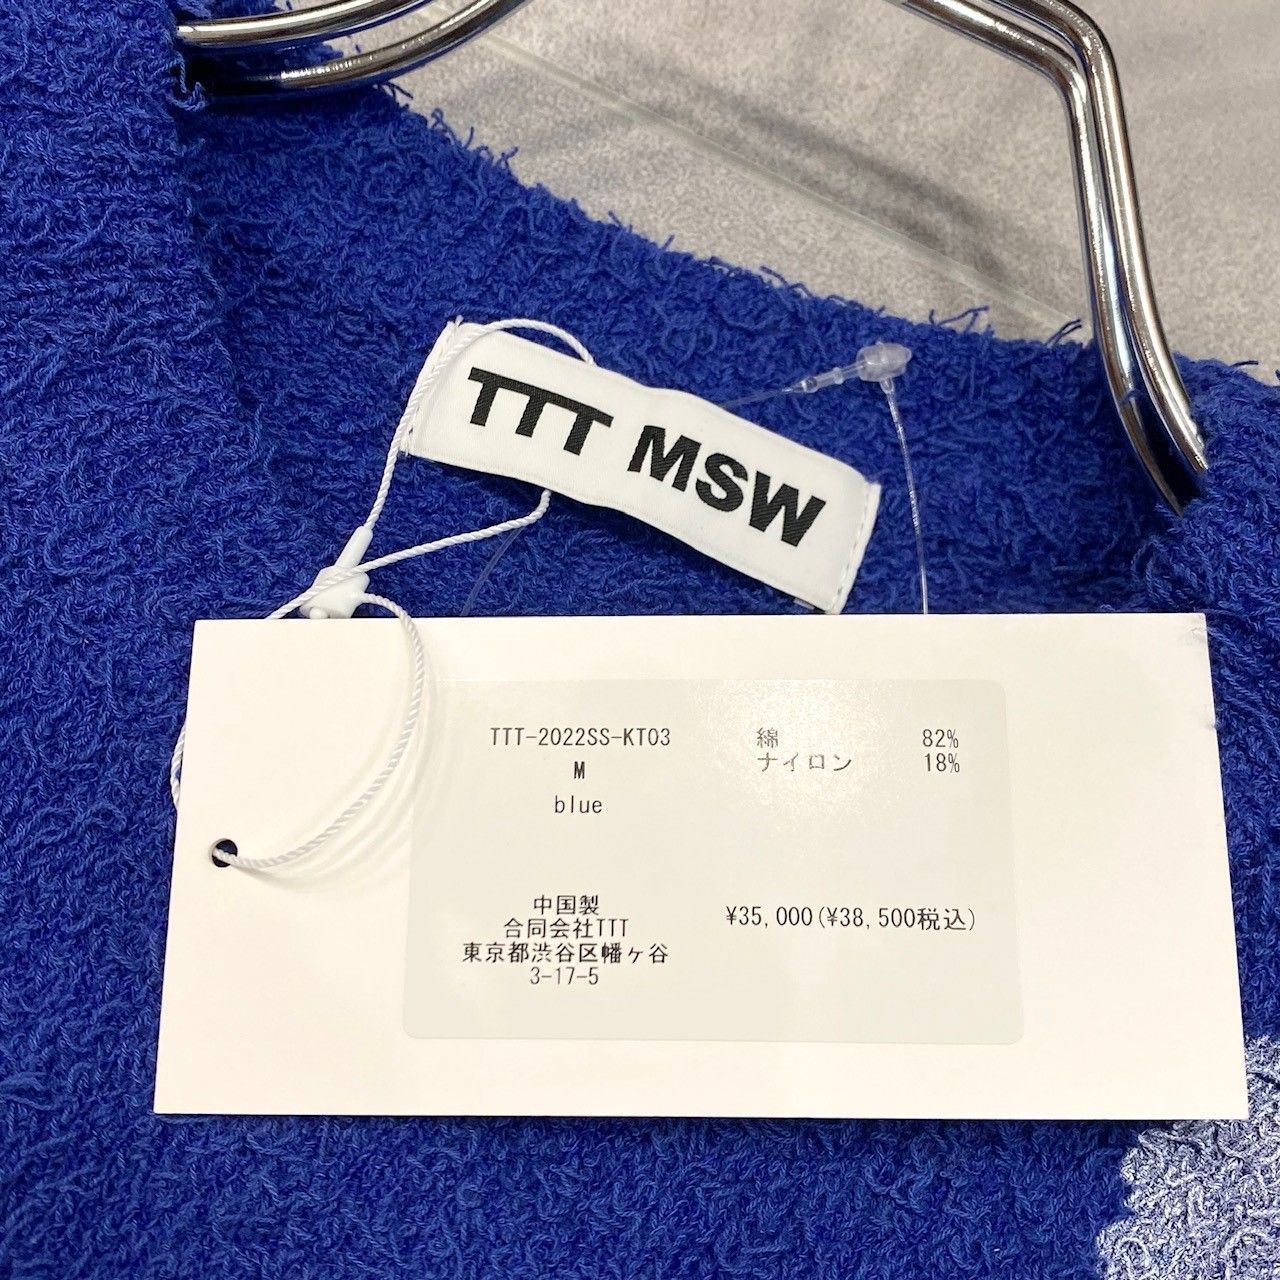 TTT MSW SS Bonsai Stencil Knit 盆栽 ニット ティーモダン